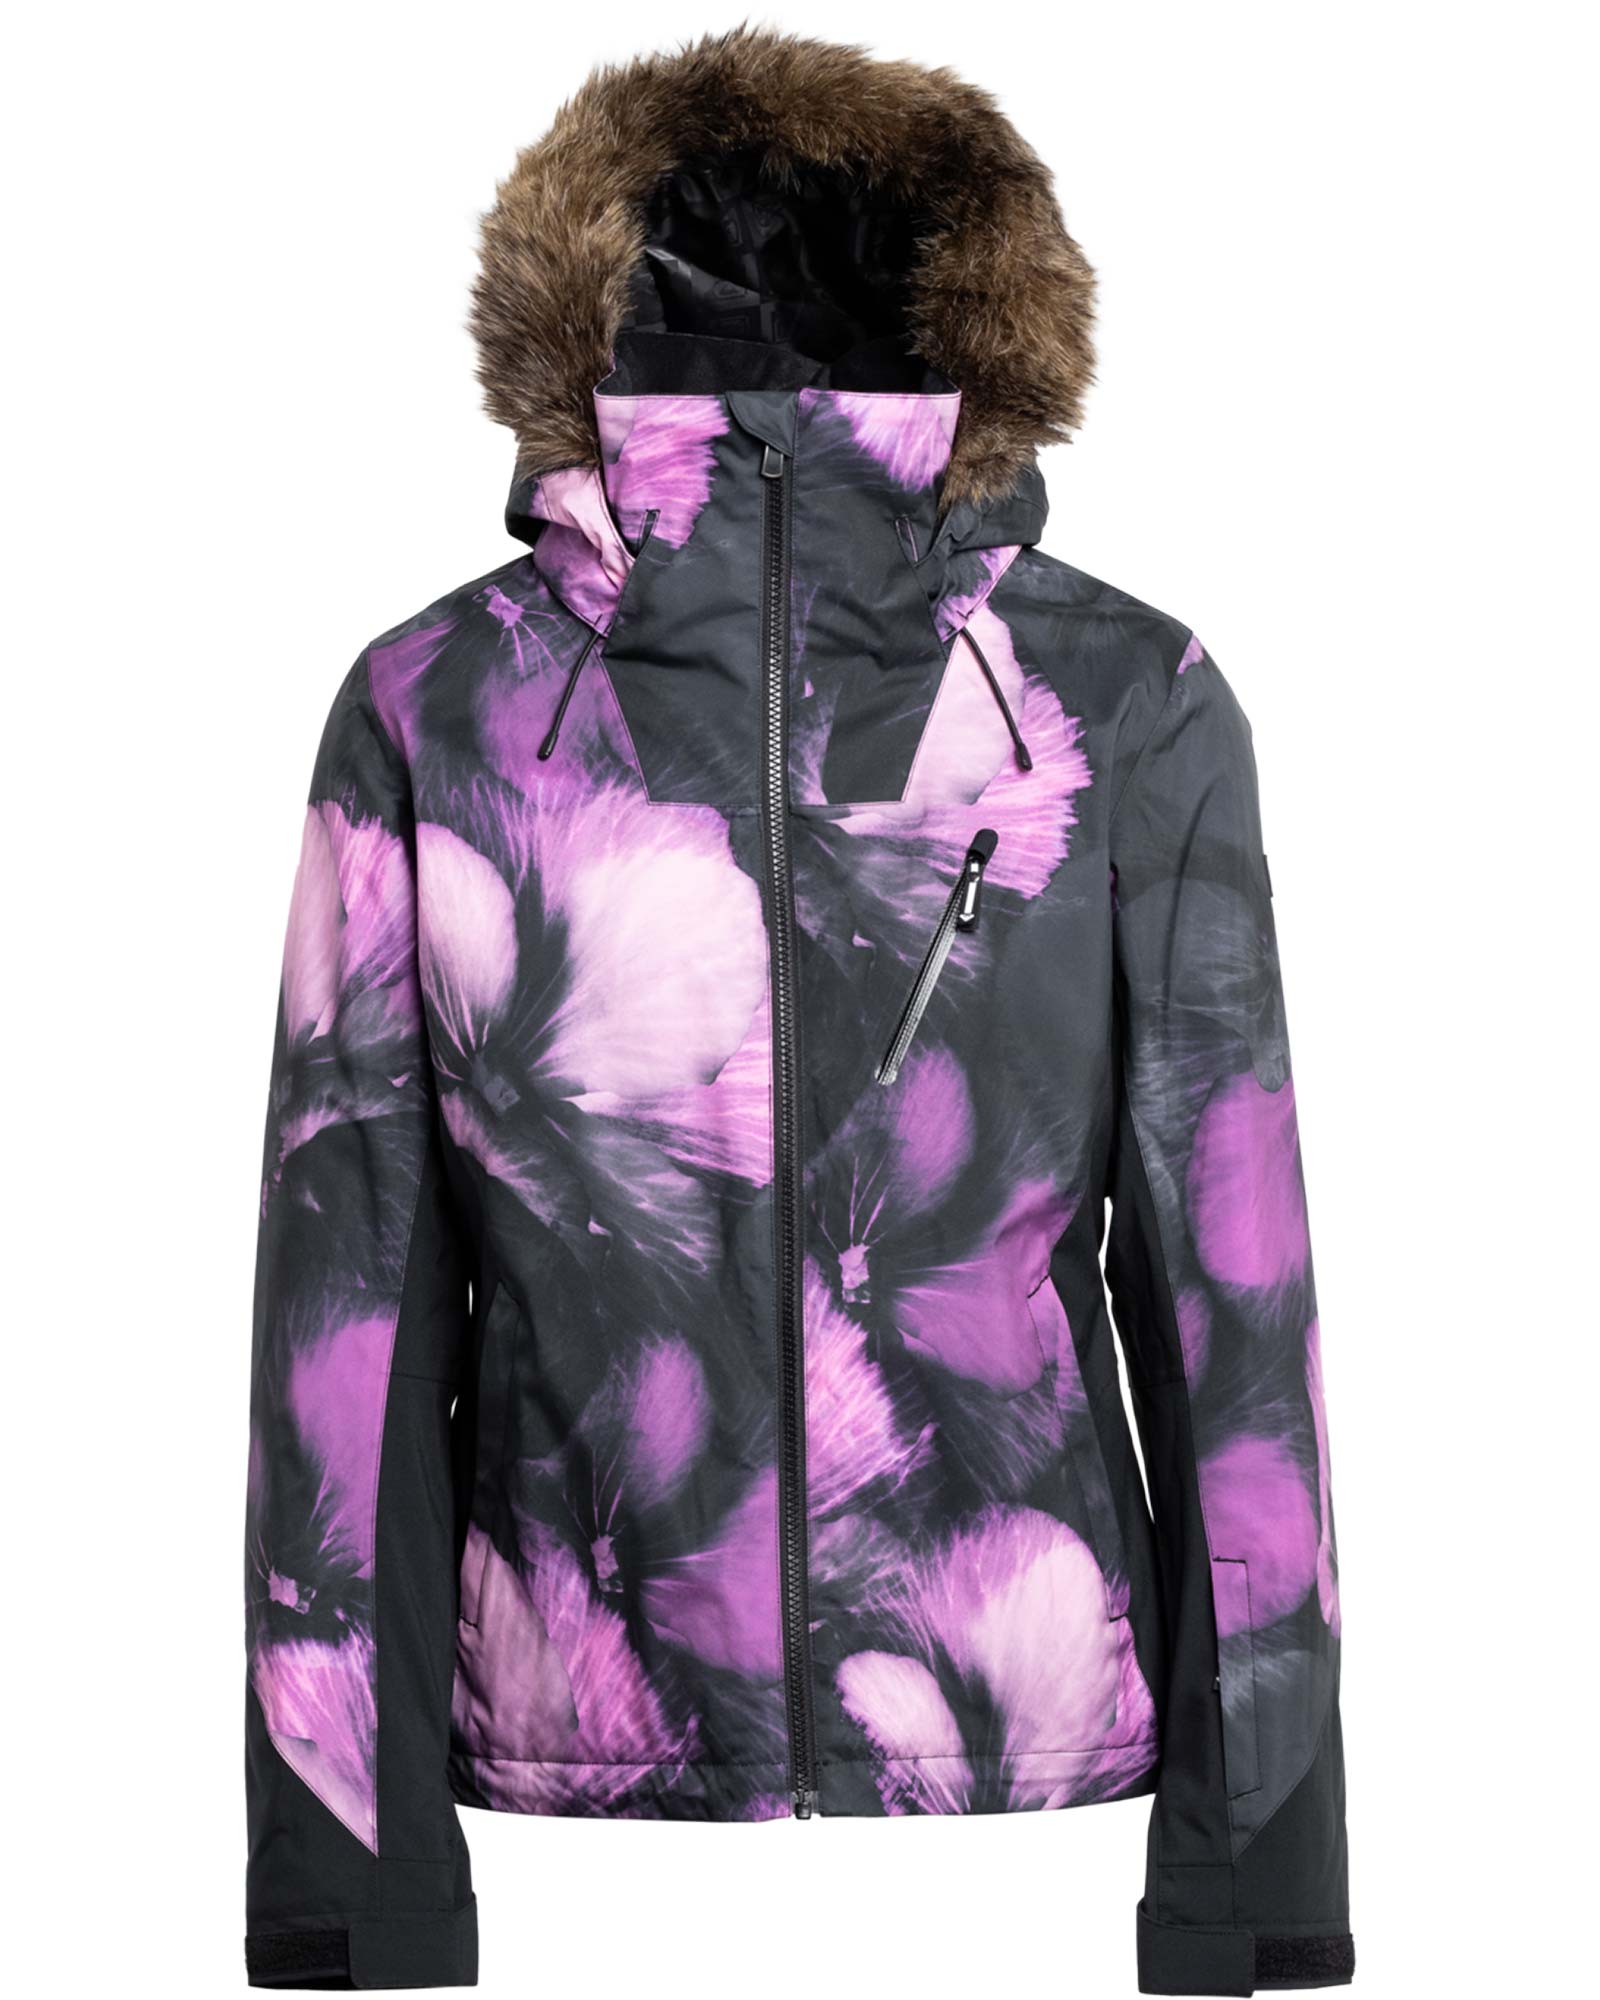 Roxy Jet Ski Premium Women’s Jacket - True Black Pansy Print S